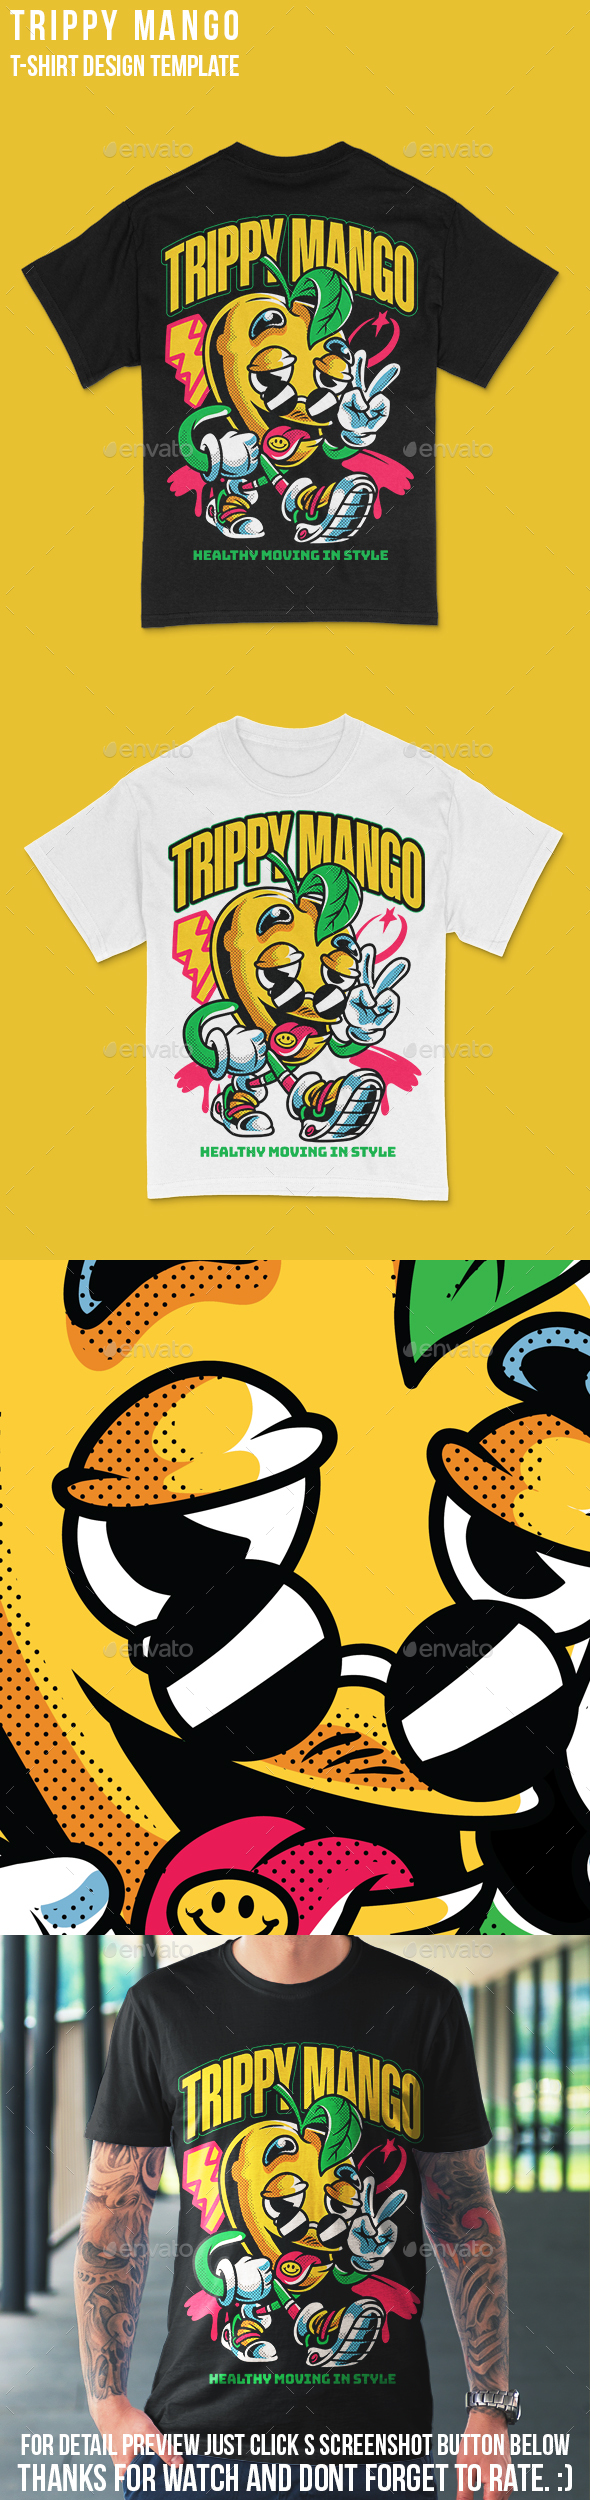 [DOWNLOAD]Trippy Mango T-Shirt Design Template